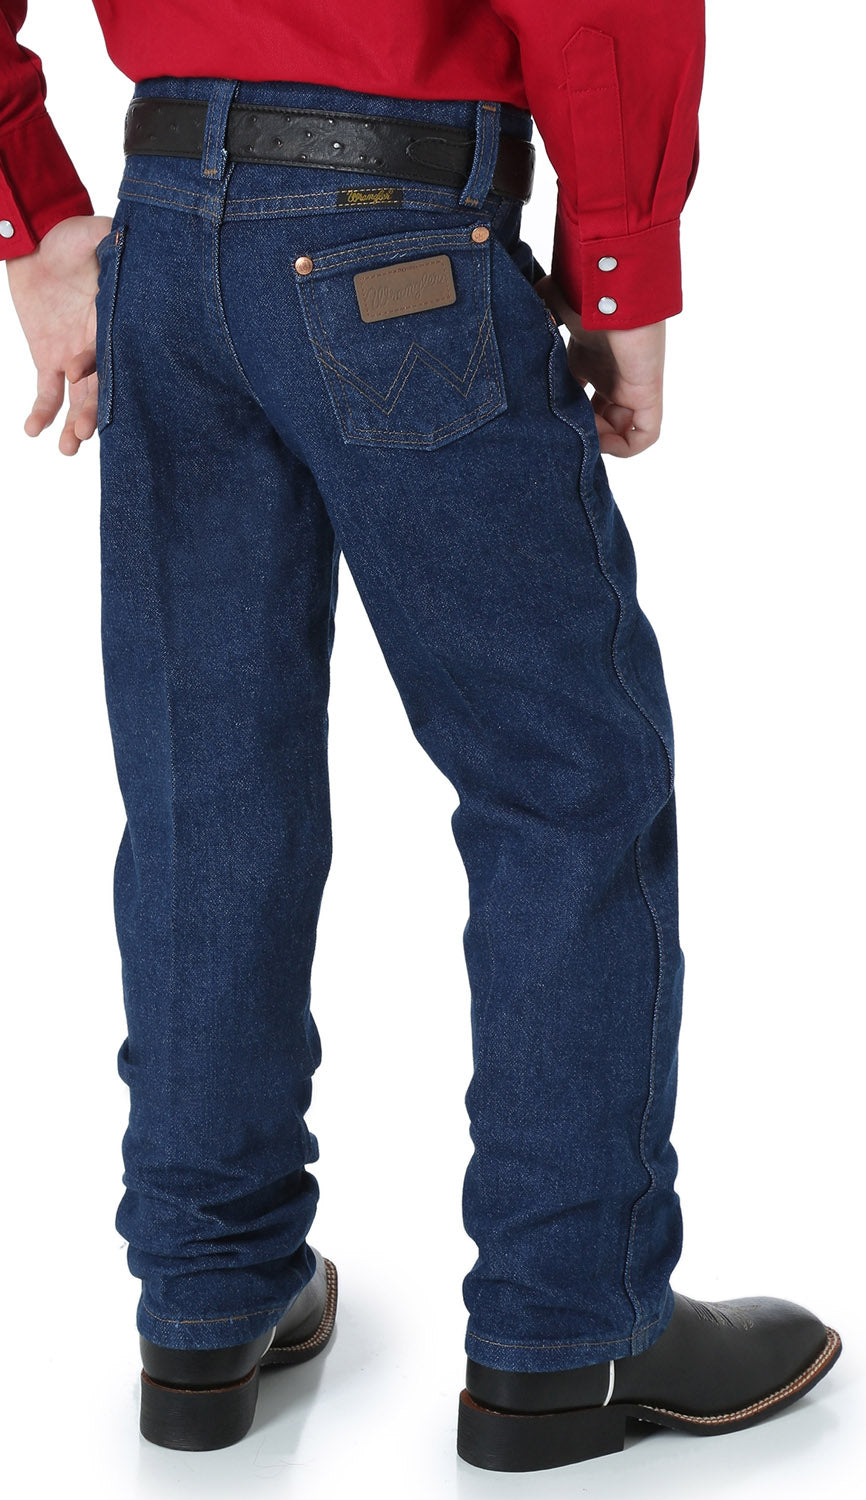 Pard's Western Shop Wrangler ProRodeo Cowboy Cut Jeans for Little Boys